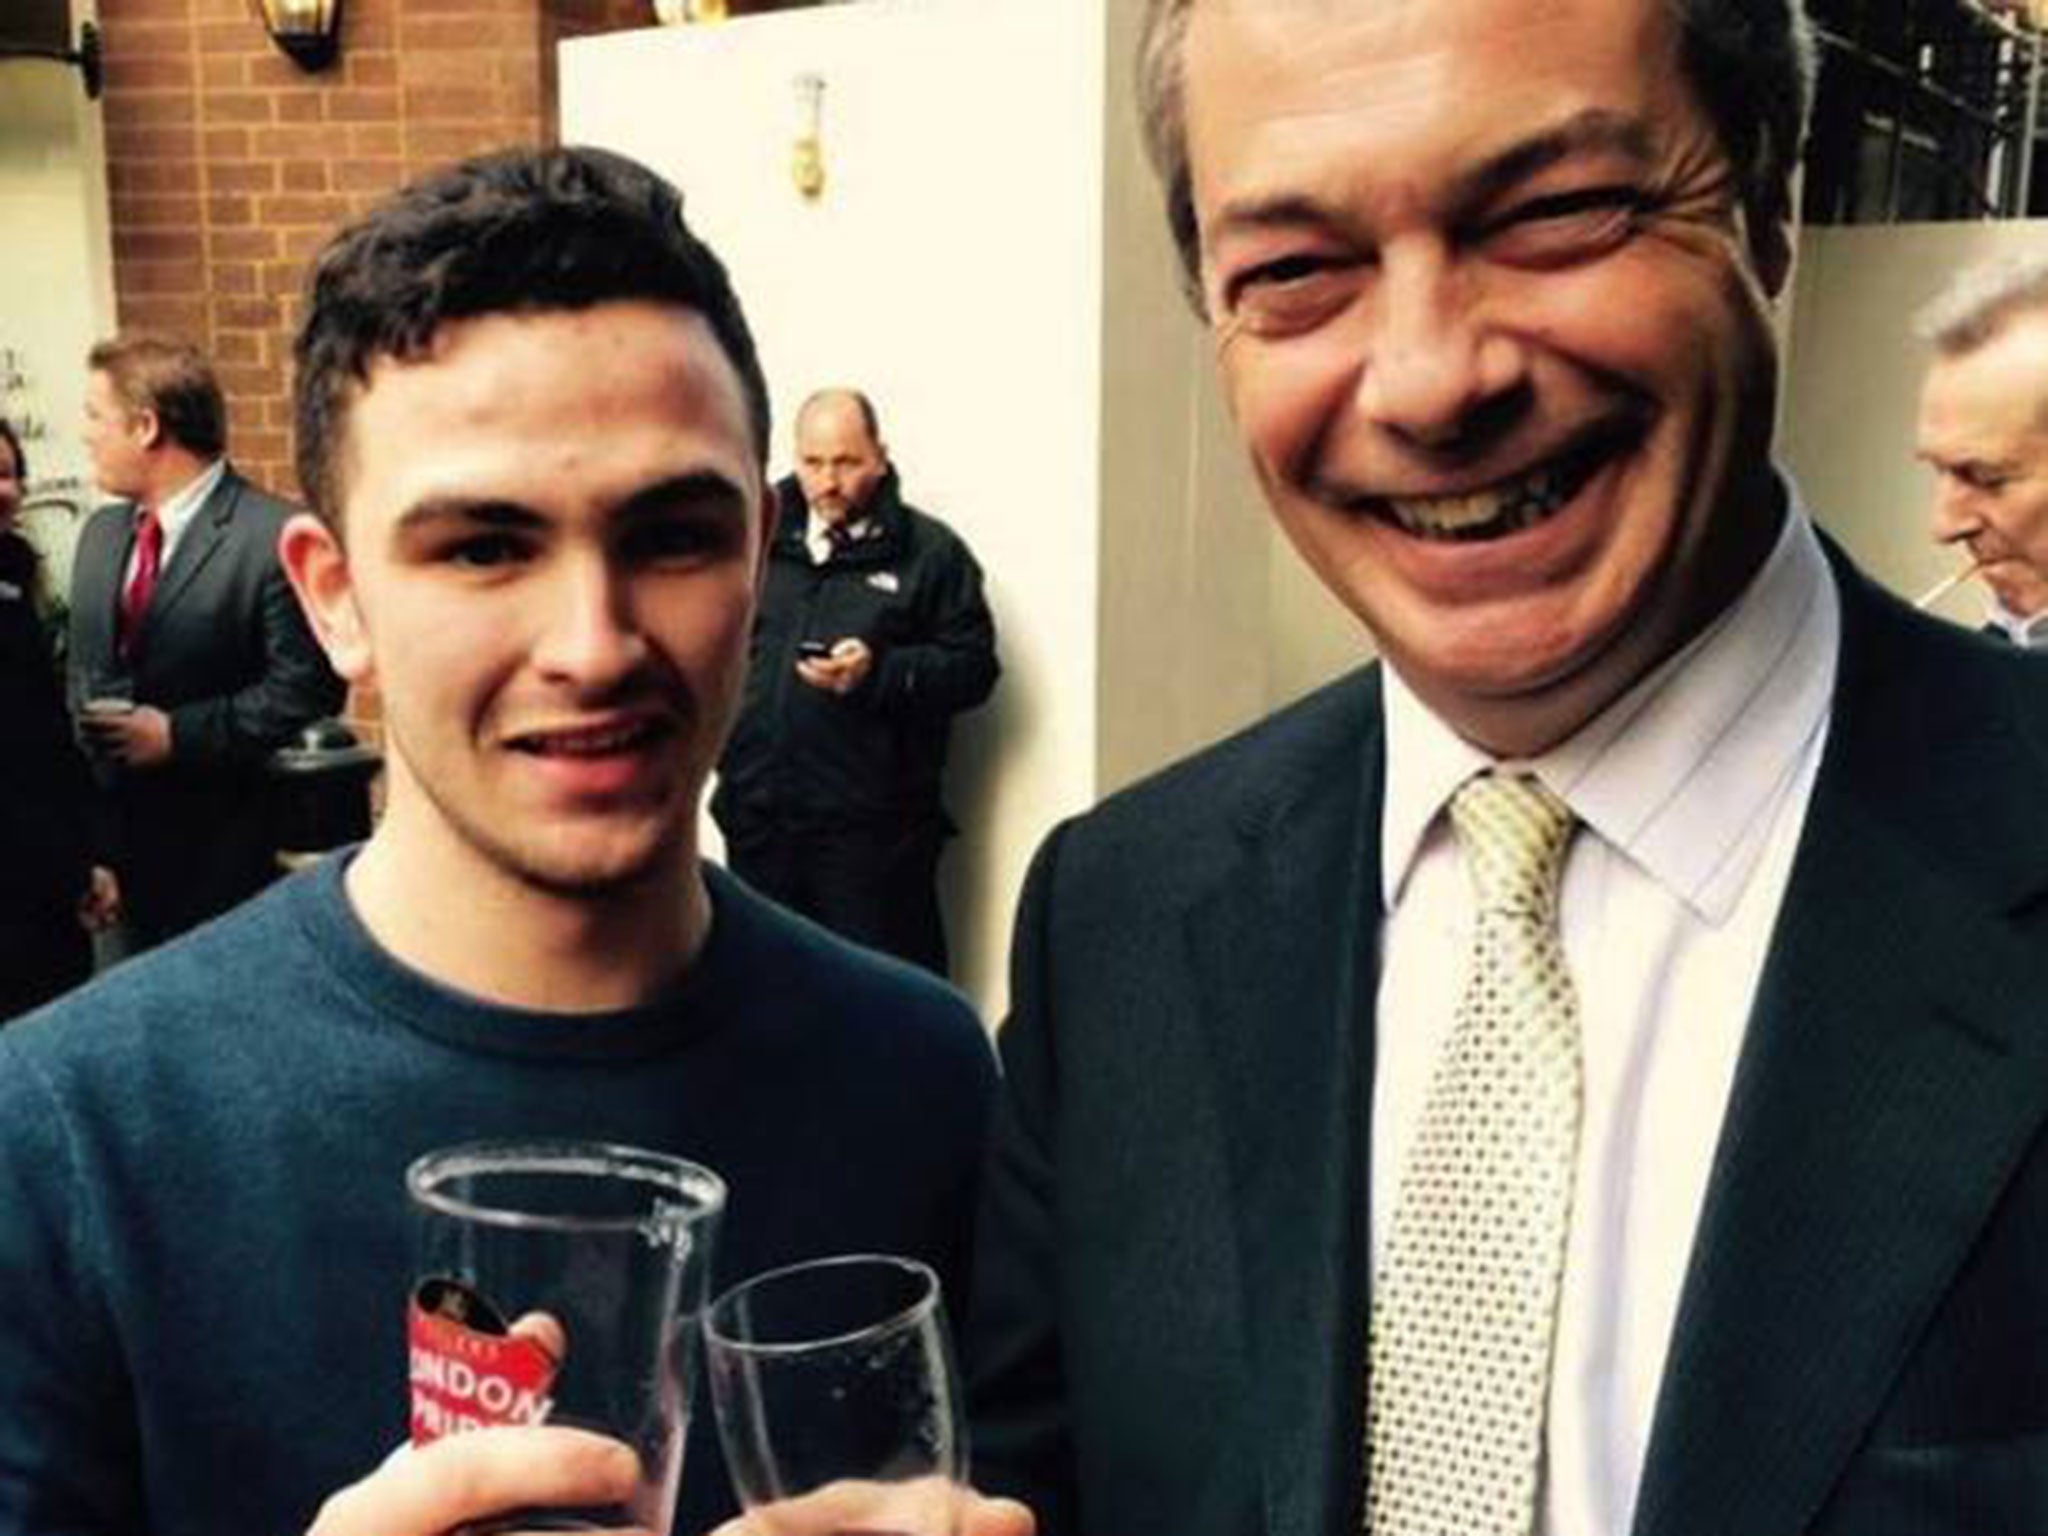 Josh Parsons with Ukip leader Nigel Farage